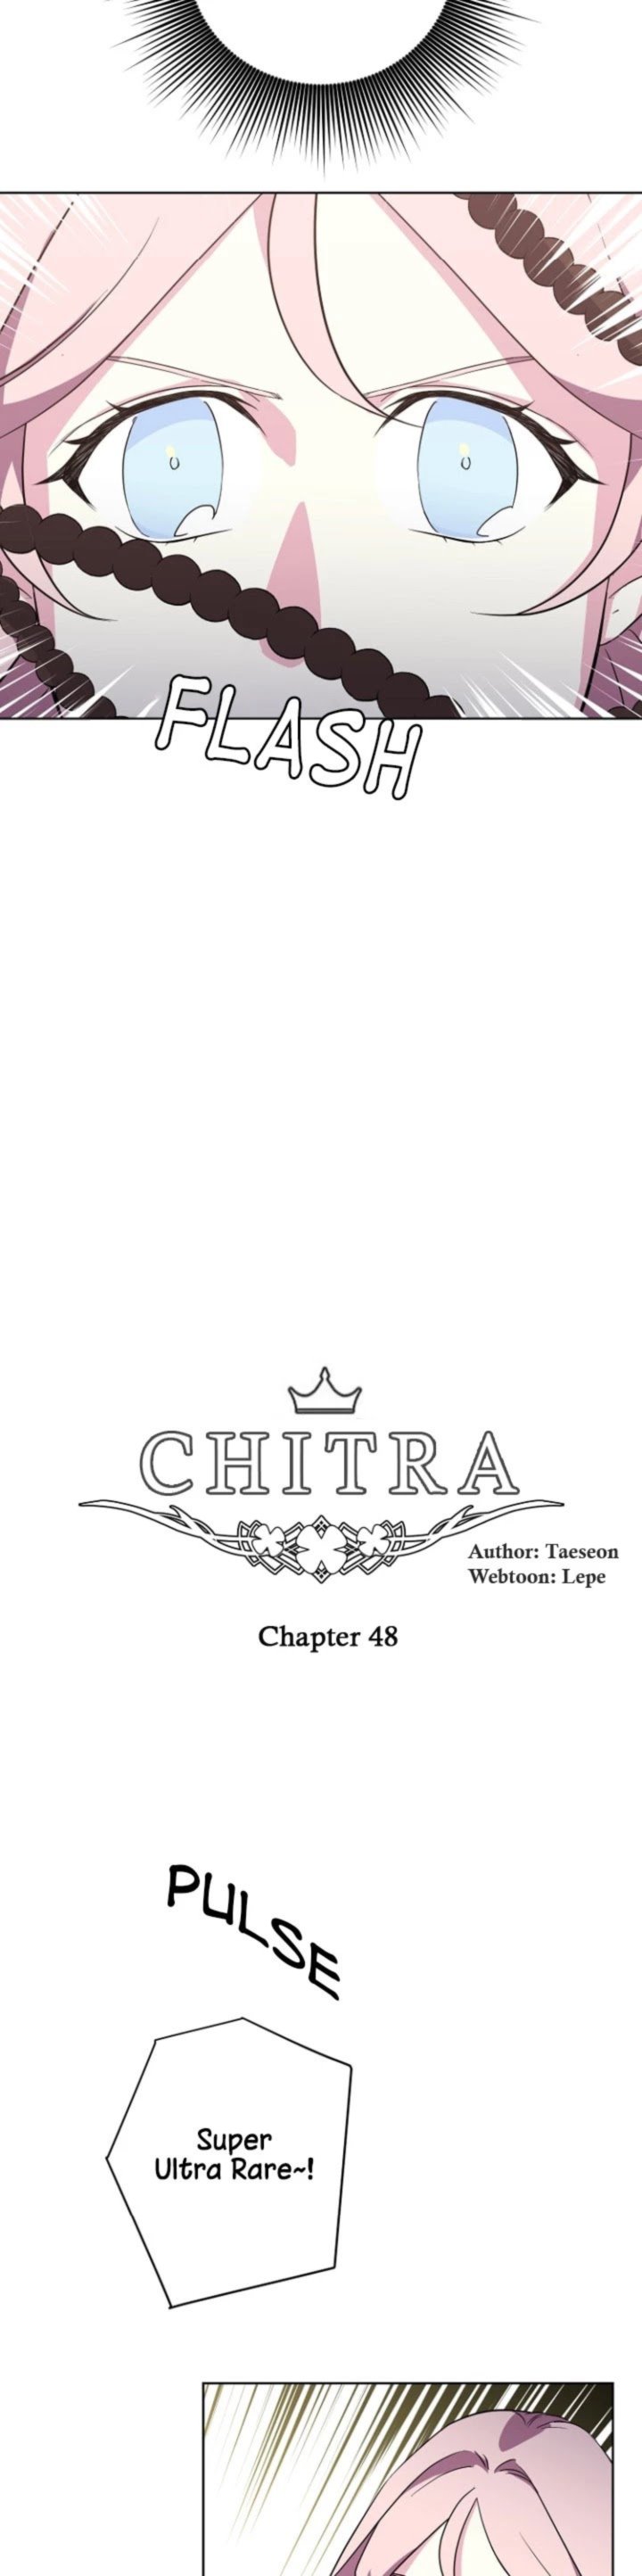 Chitra 48 2